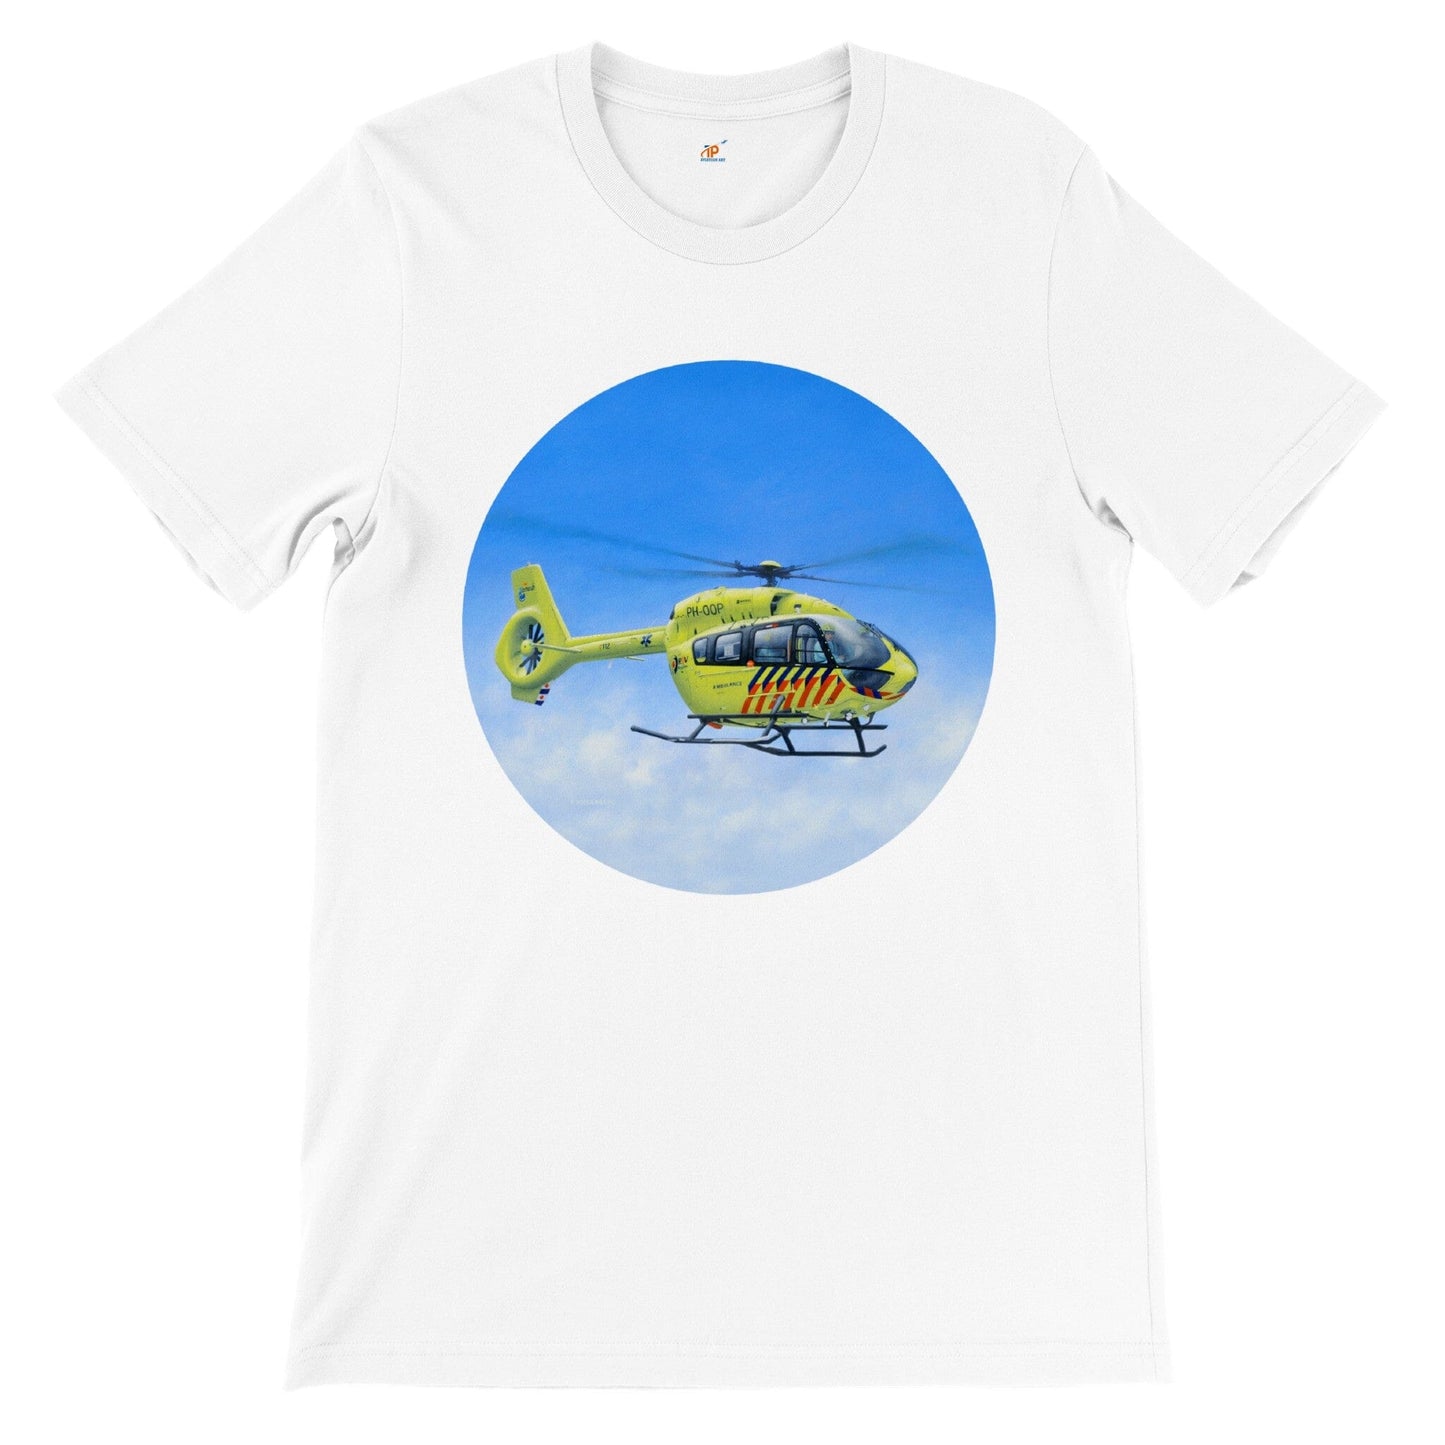 Peter Hoogenberg - T-shirt - Ambulance Helicopter Wadden Islands - Premium Unisex T-shirt TP Aviation Art White S 